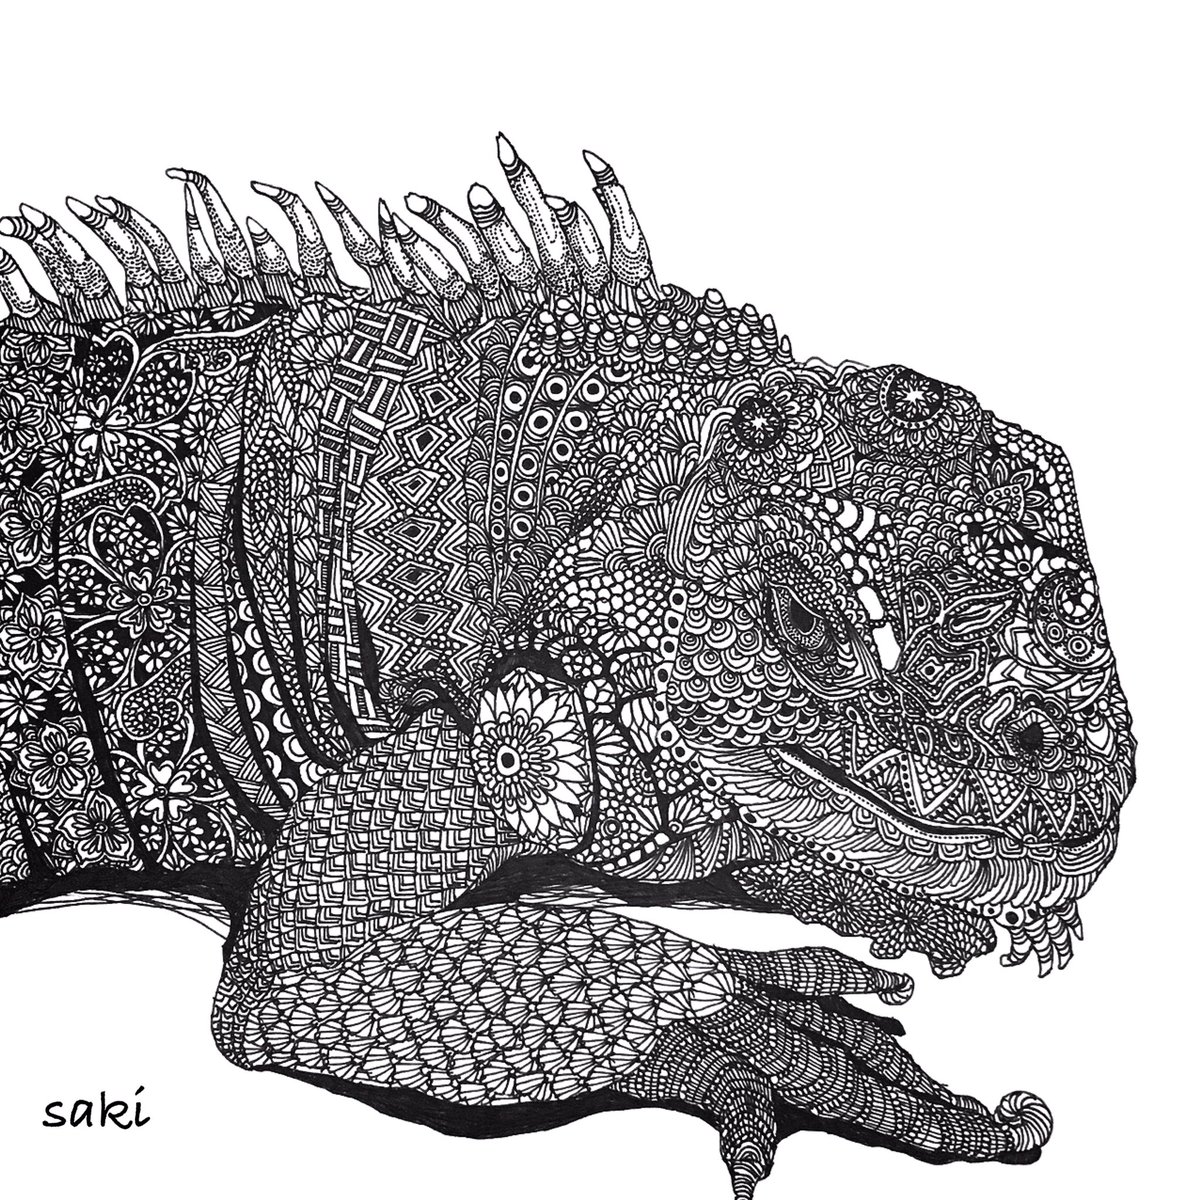 Saki ボールペン画アーティスト 在 Twitter 上 イグアナさん T Co Xzoyr1rtgu イラスト 爬虫類 イグアナ Illustration Reptile Iguana T Co Af18pw3gyn Twitter